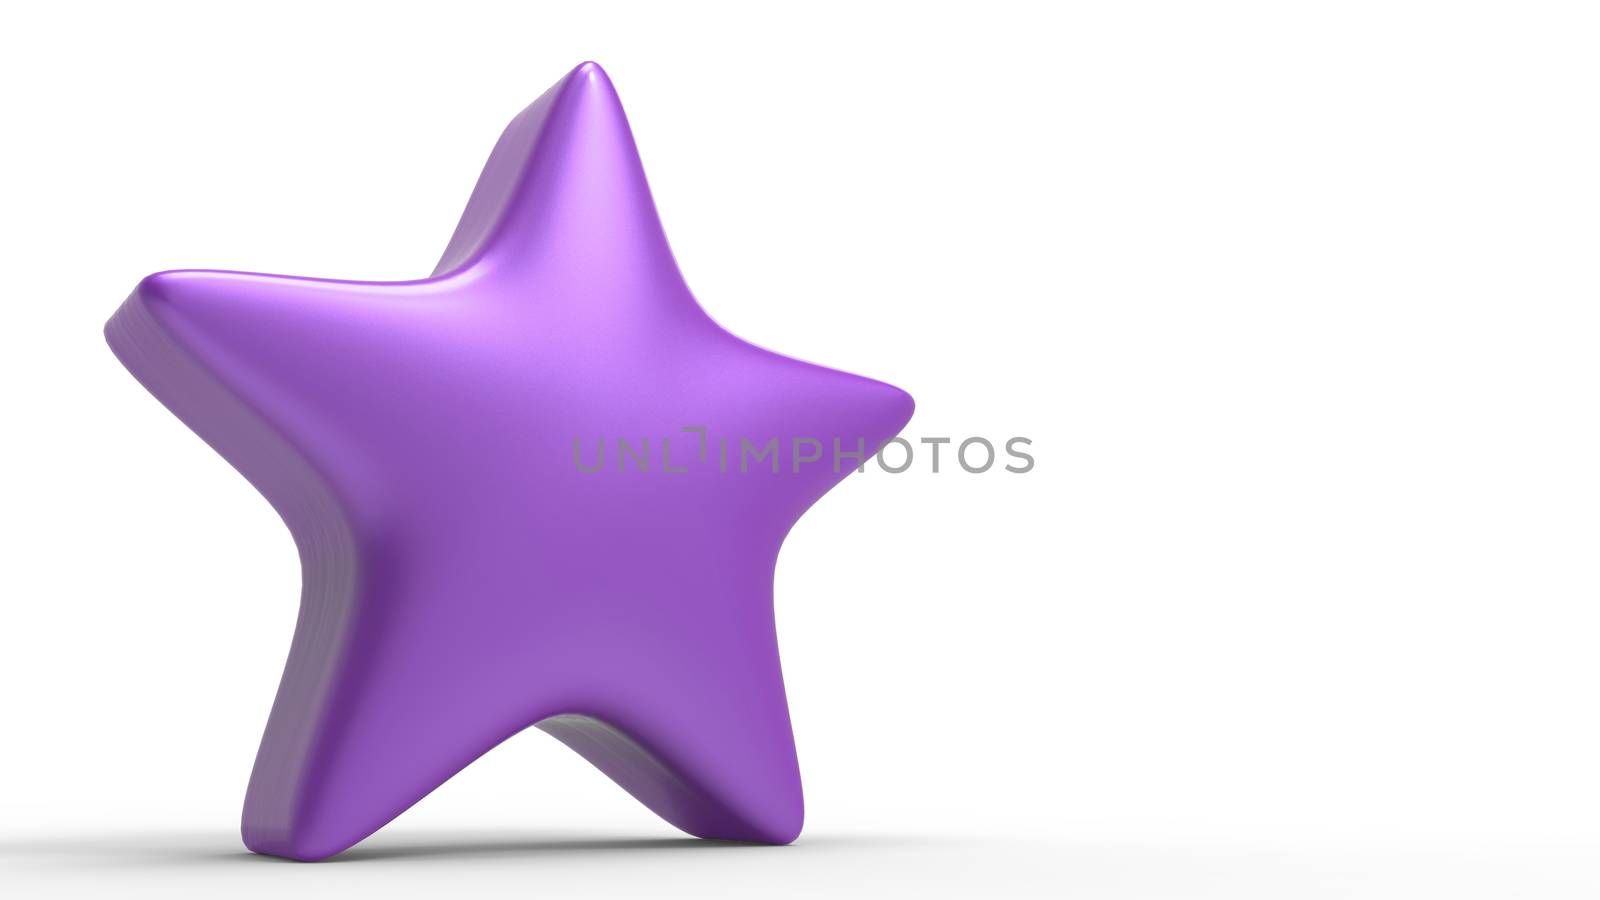 3d violet star on color background. Render and illustration of golden star for premium reviews by Andreajk3